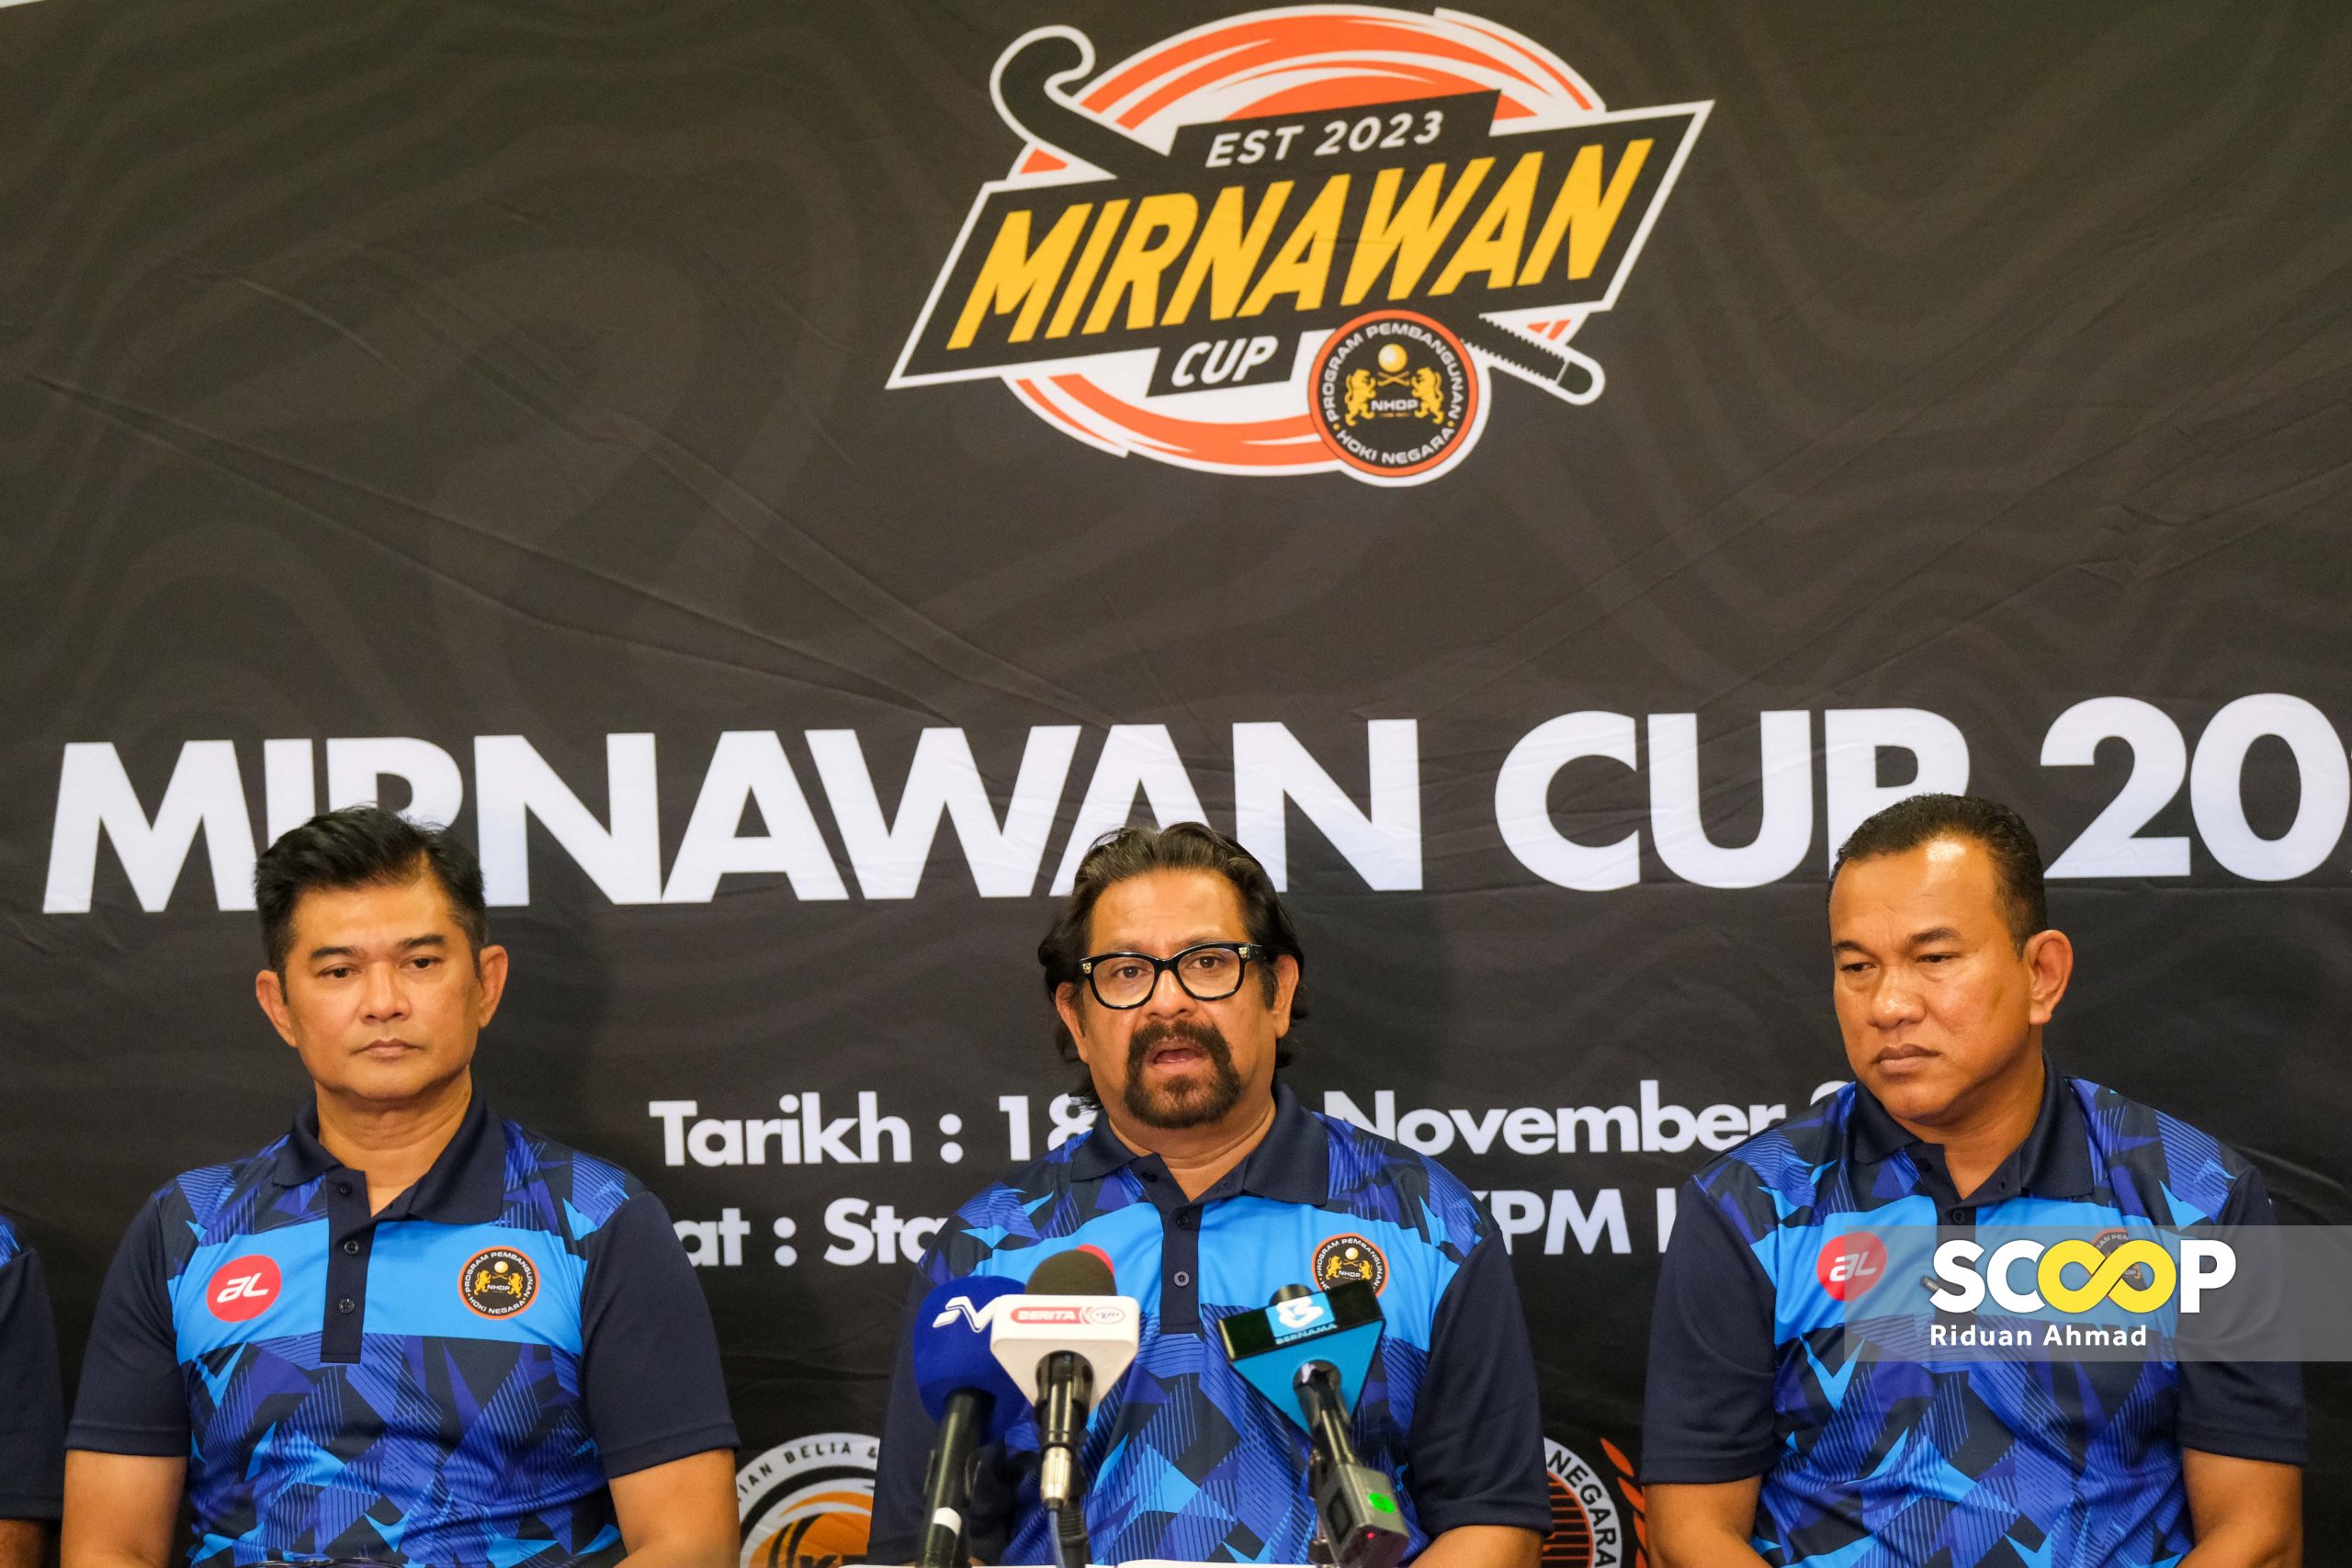 MHC pulls through budget hurdles, commits to development through Mirnawan Cup